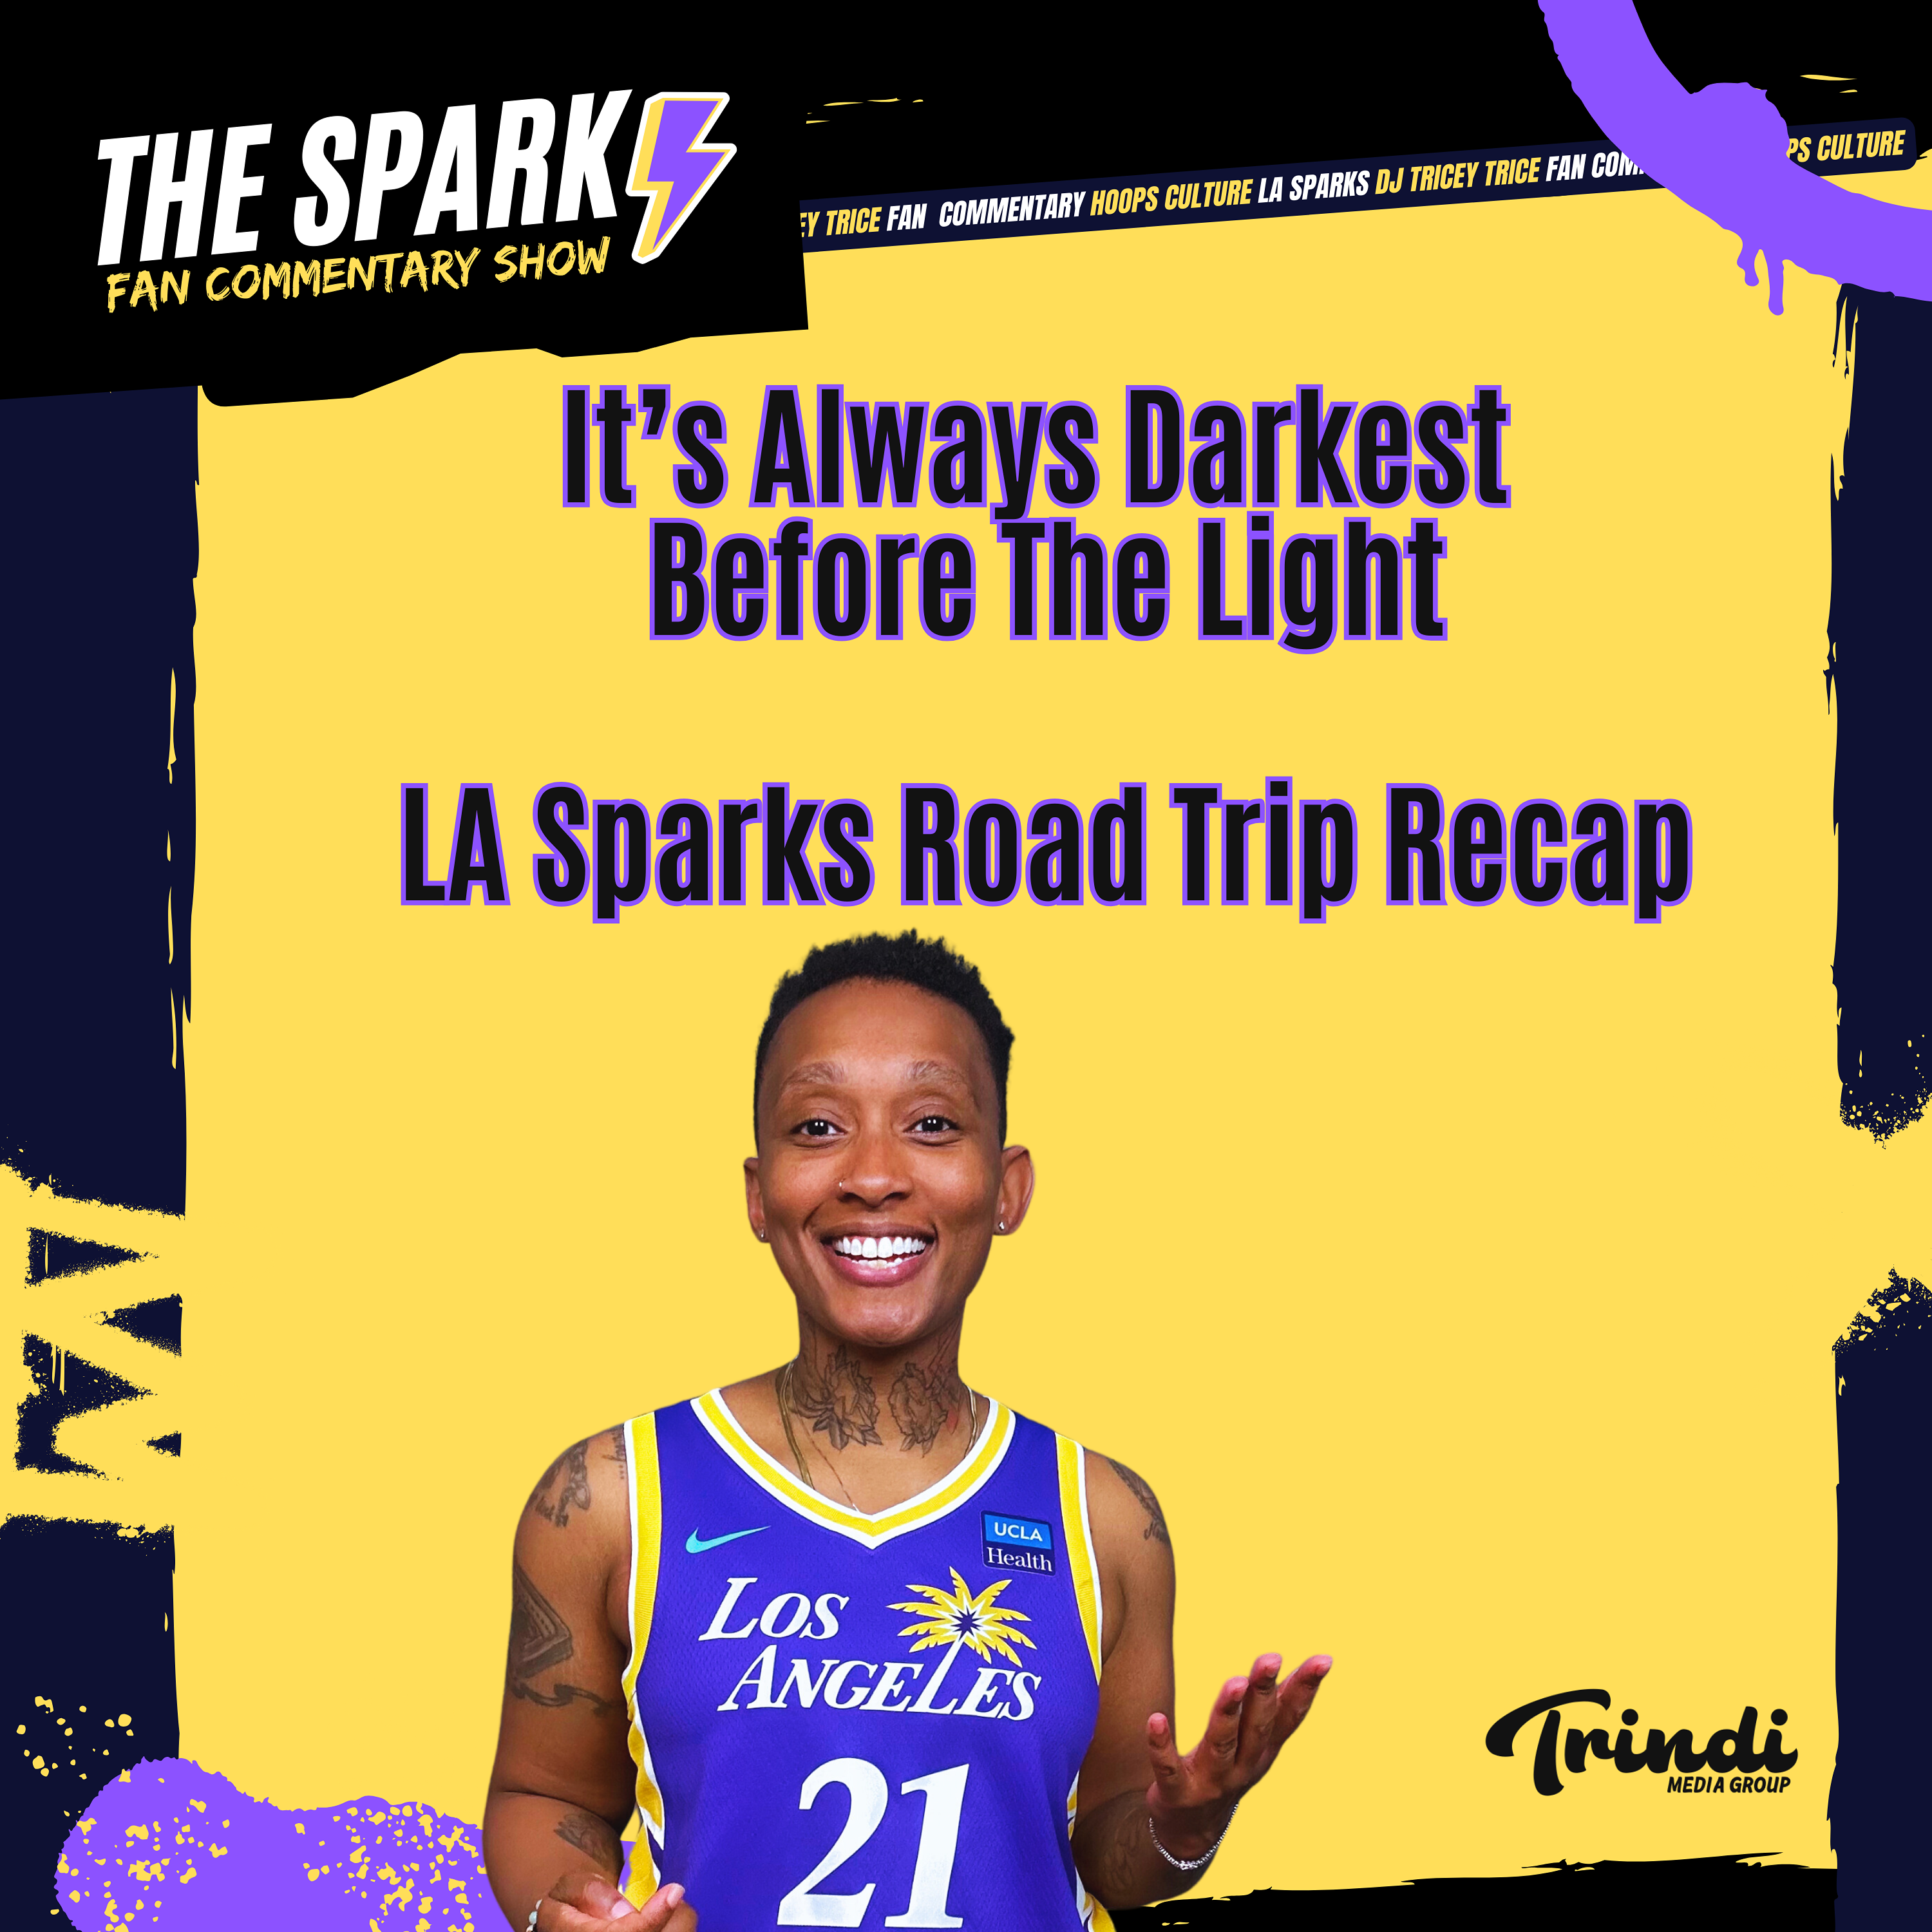 It's Darkest Before The Light  LA Sparks Road Trip Recap